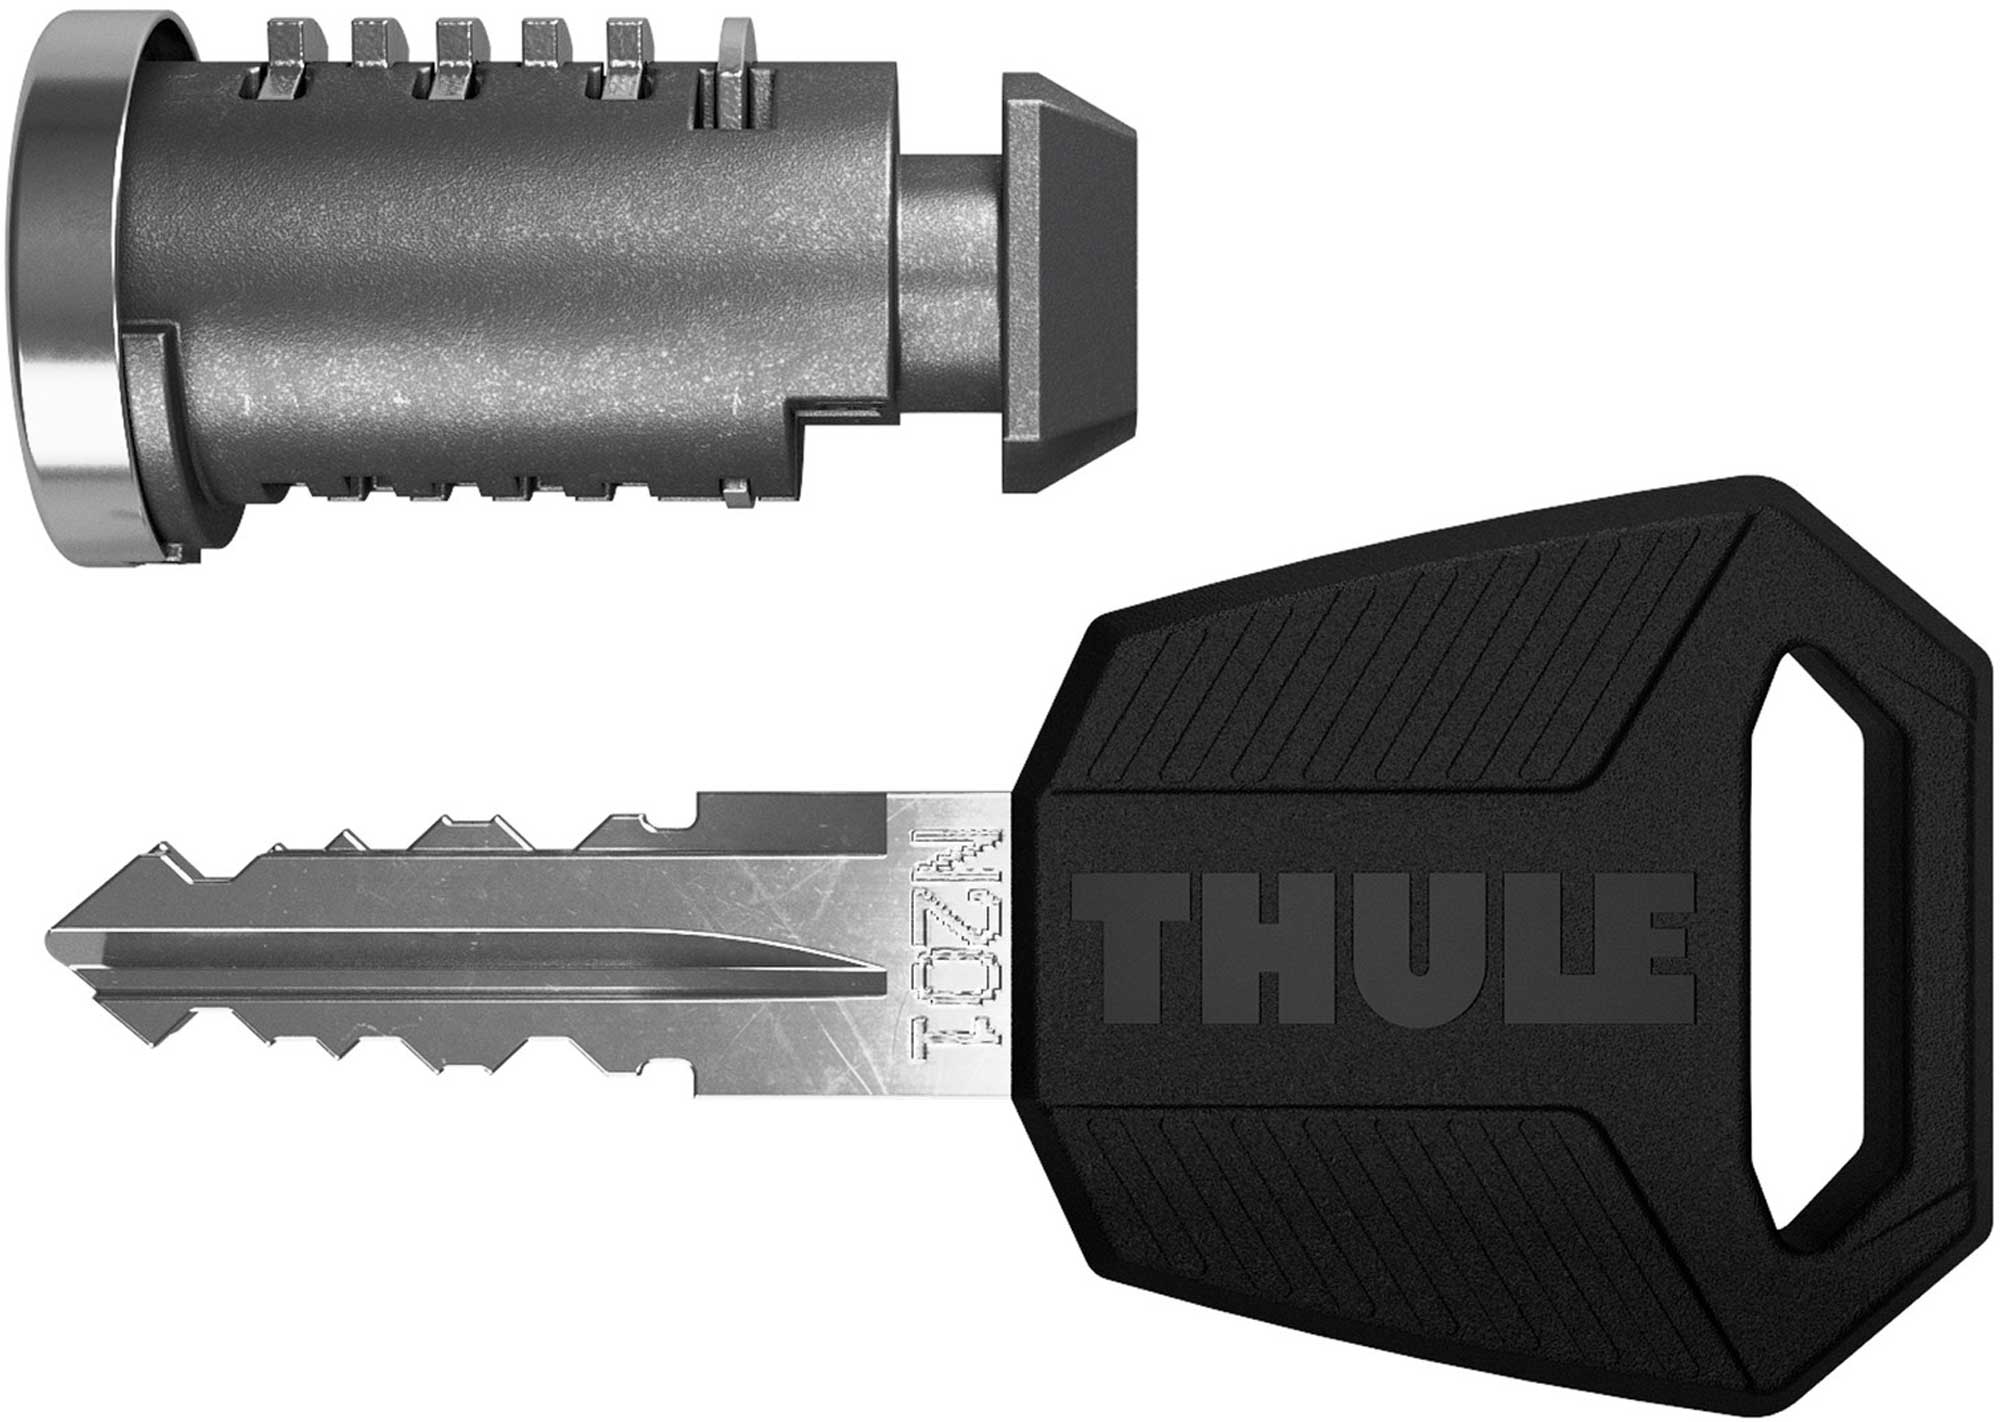 Thule accessory